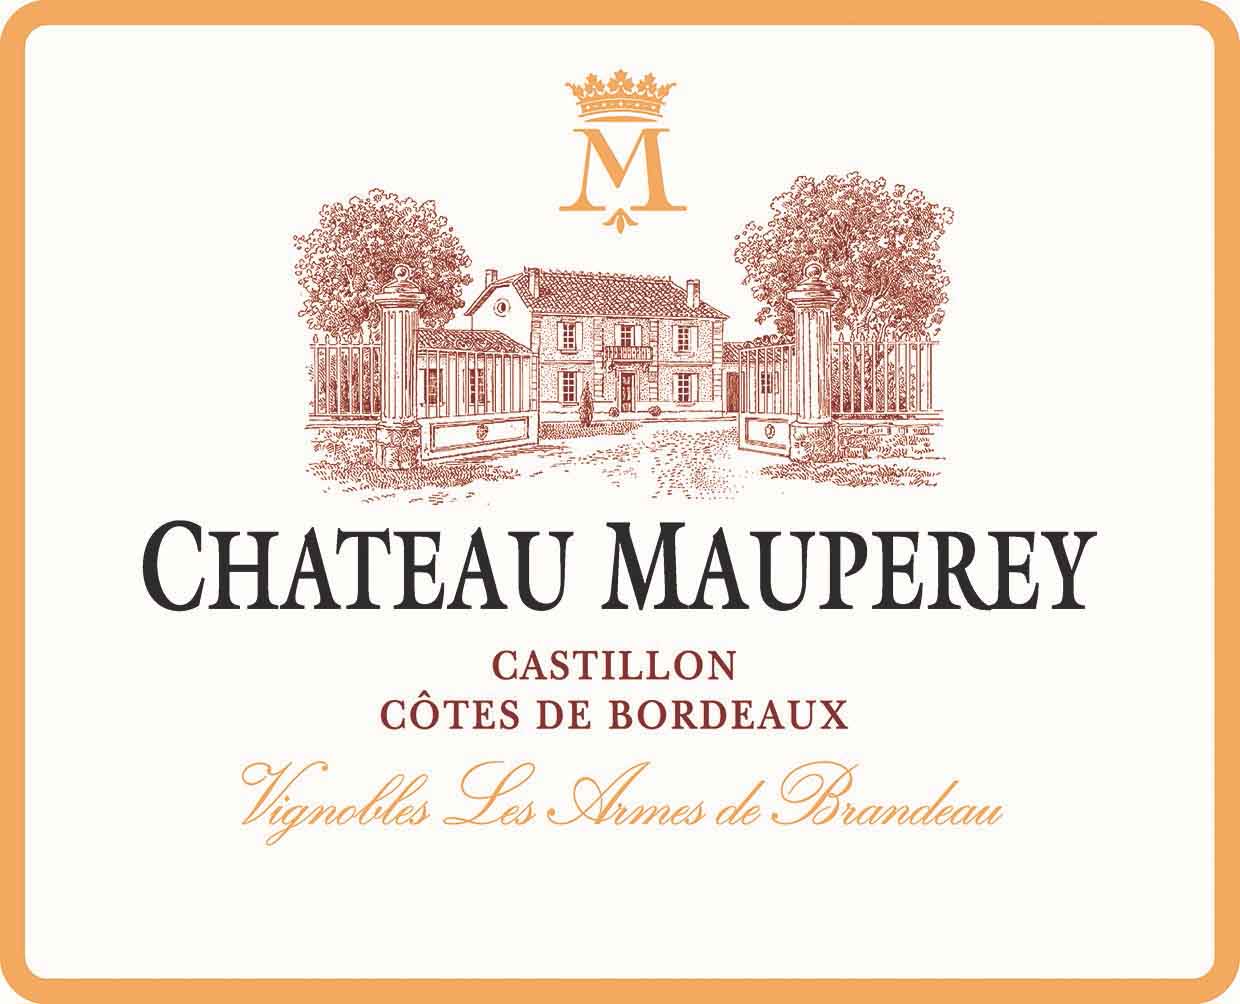 Chateau Mauperey label